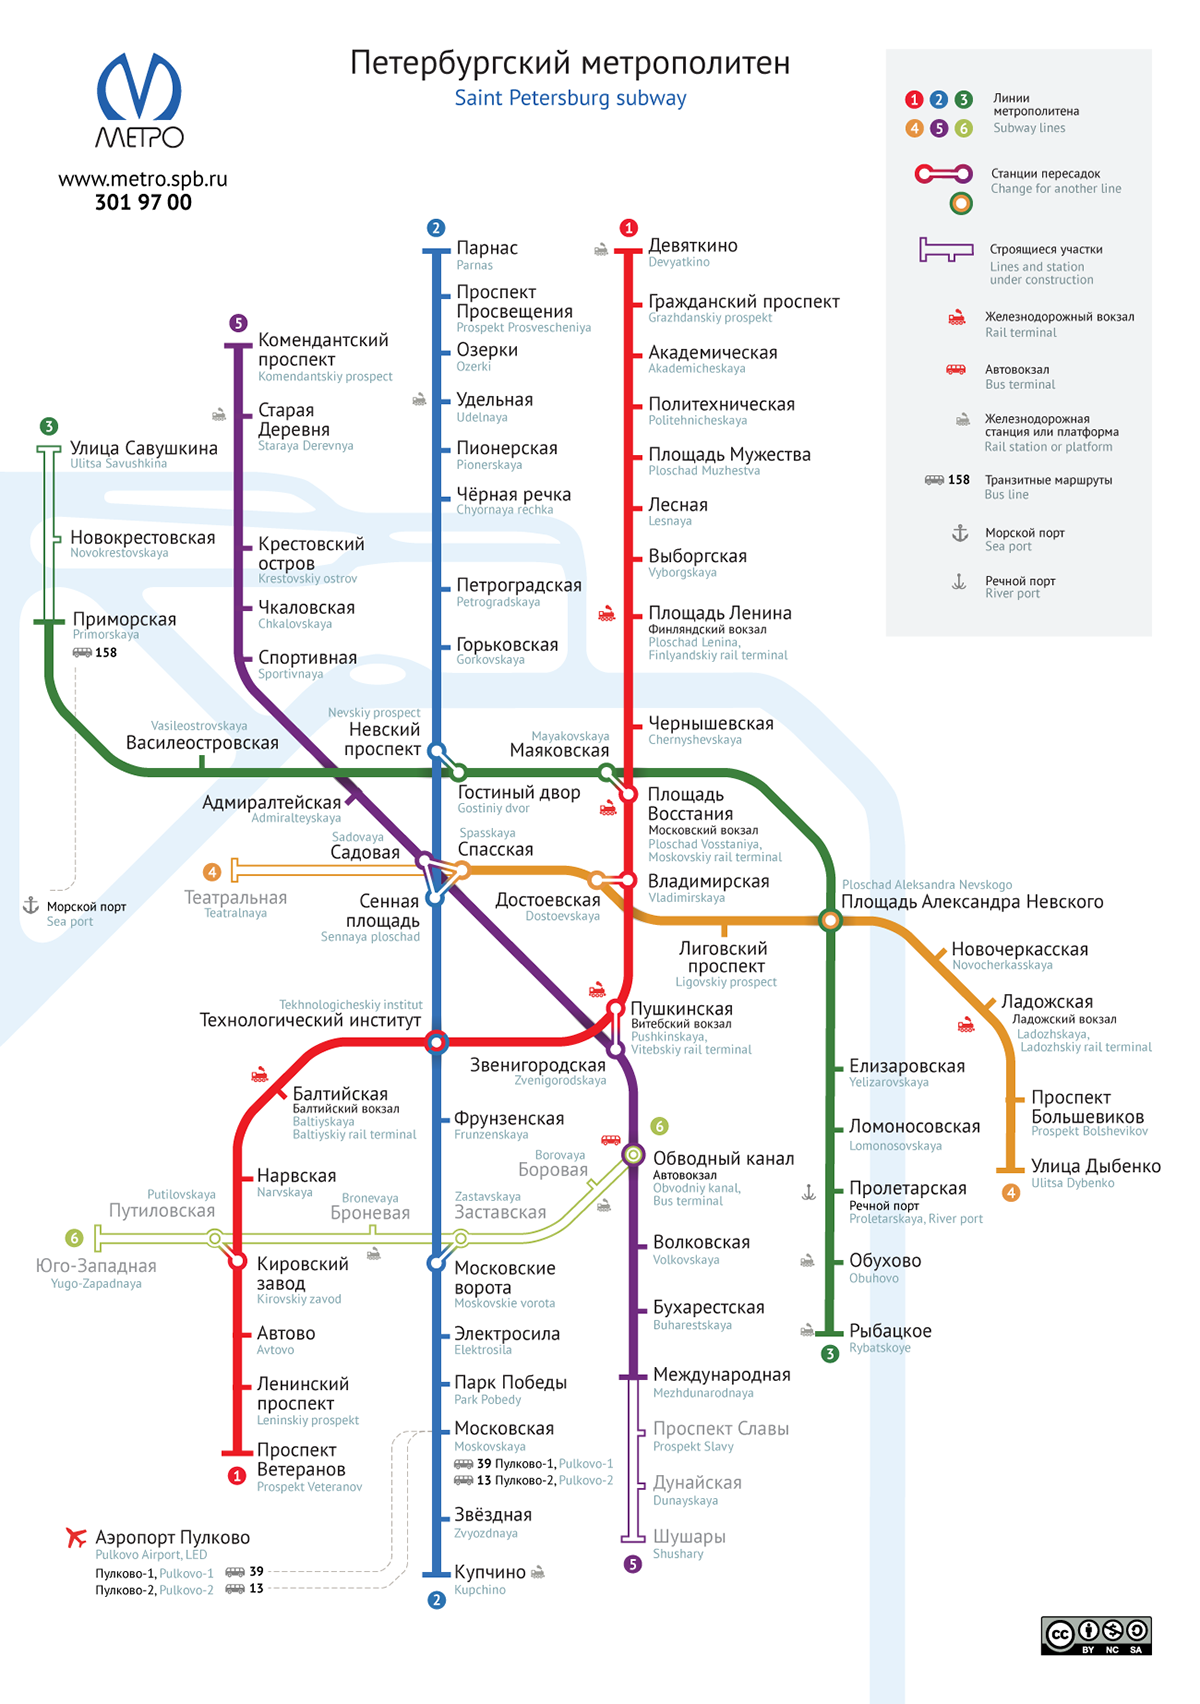 metro underground Saint-Petersburg creative commons